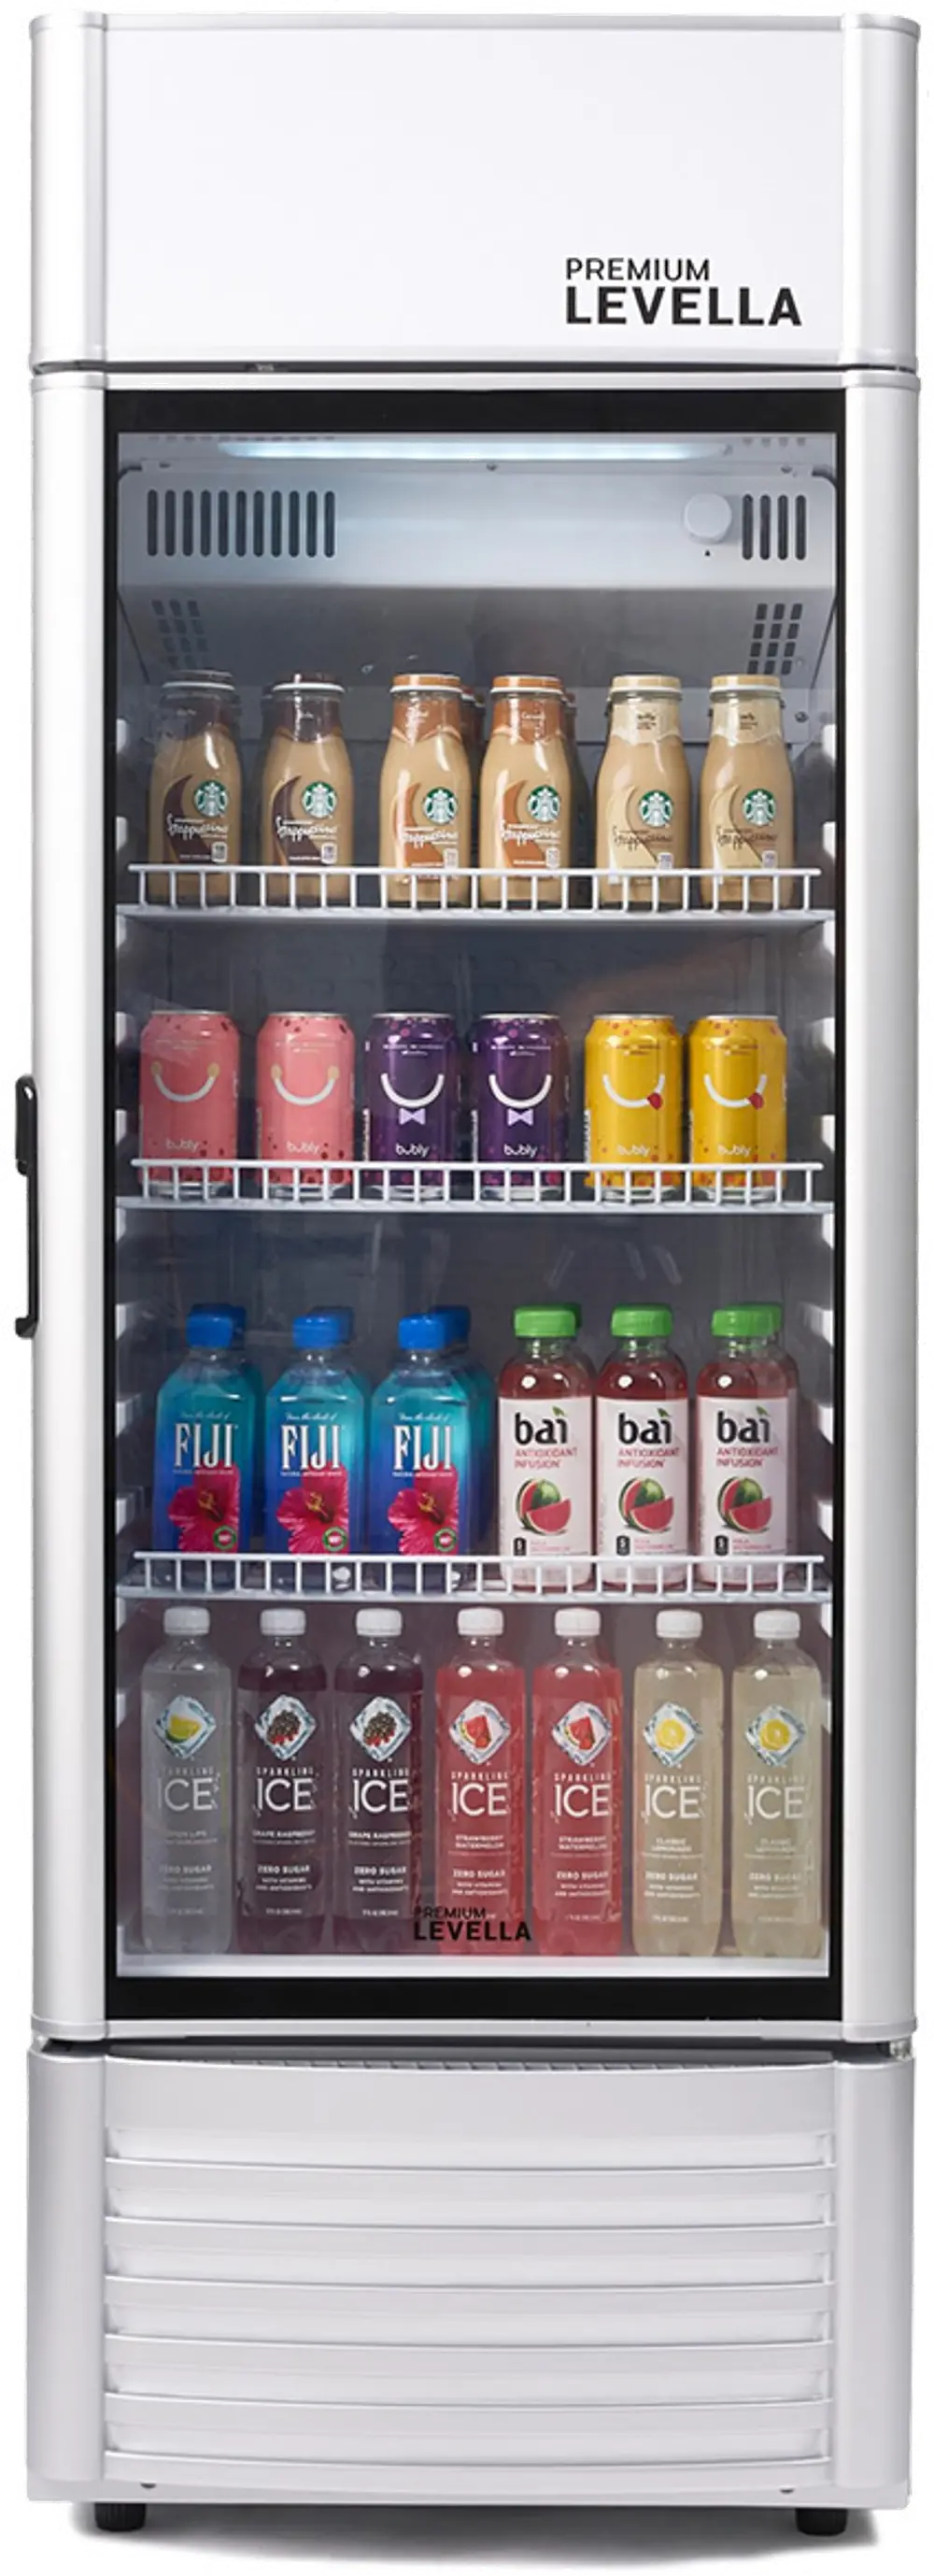 Levella 6.5 Cu Ft Display Beverage Refrigerator - Silver-1